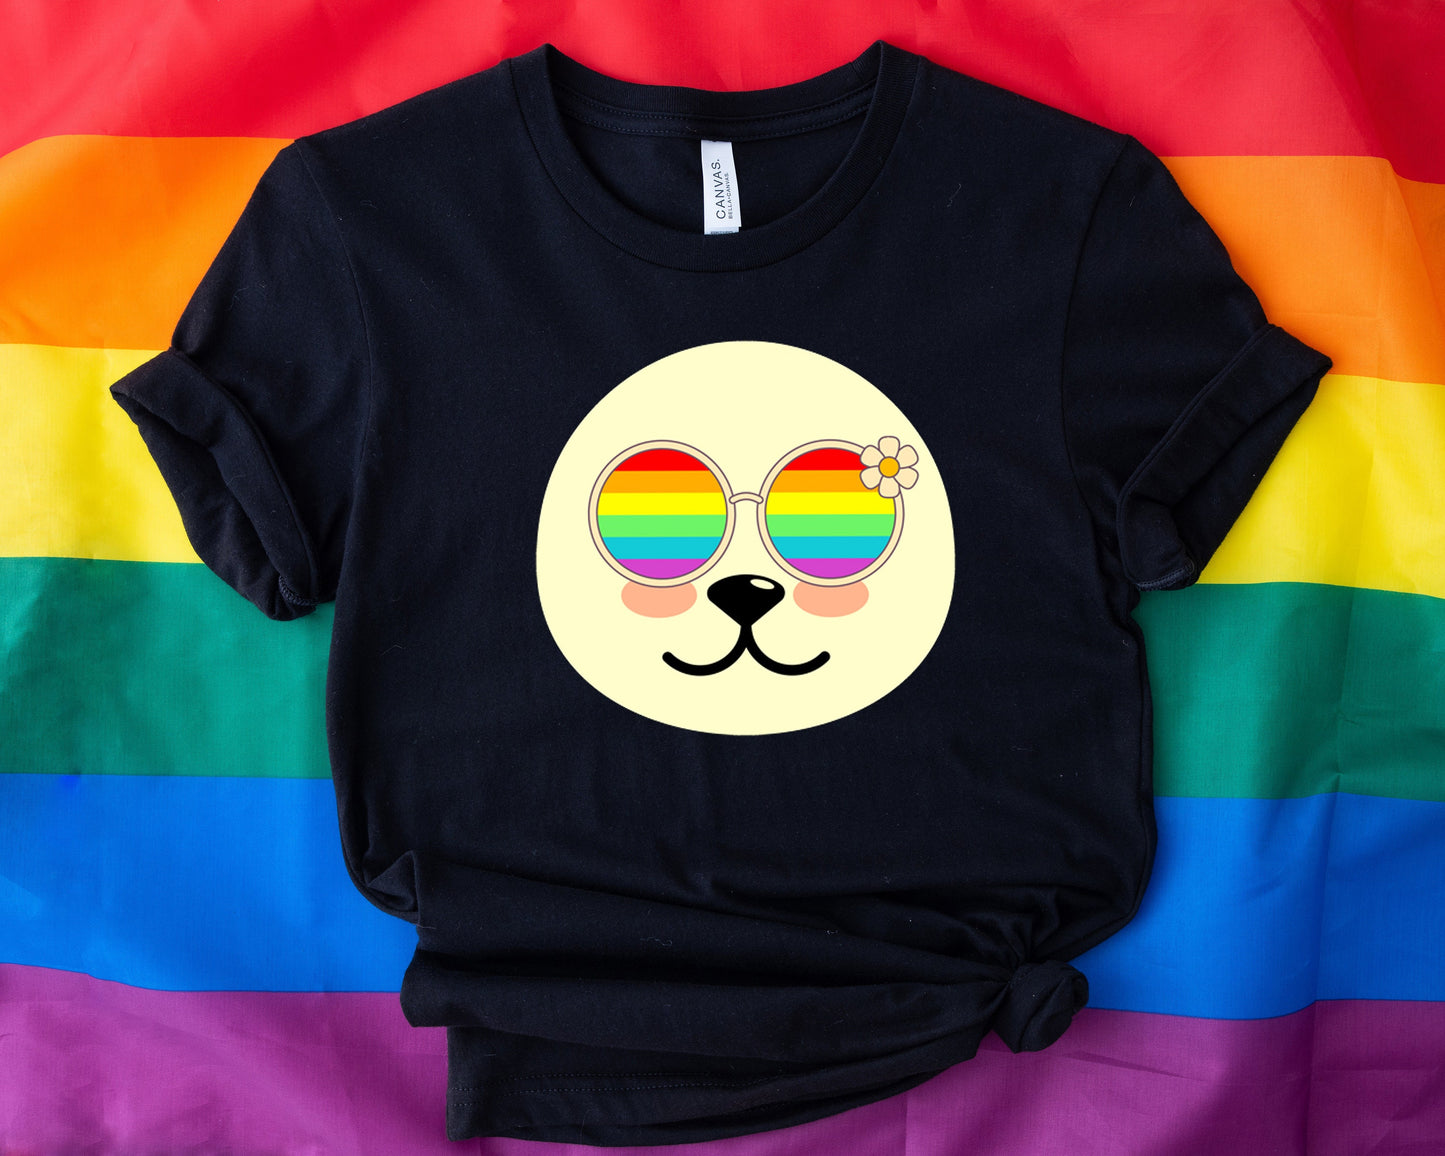 Super cute Seal with rainbow glasses shirt, Rainbow glasses on an adorable Seal, precious Seal showing off pride. Beautiful pride Seal